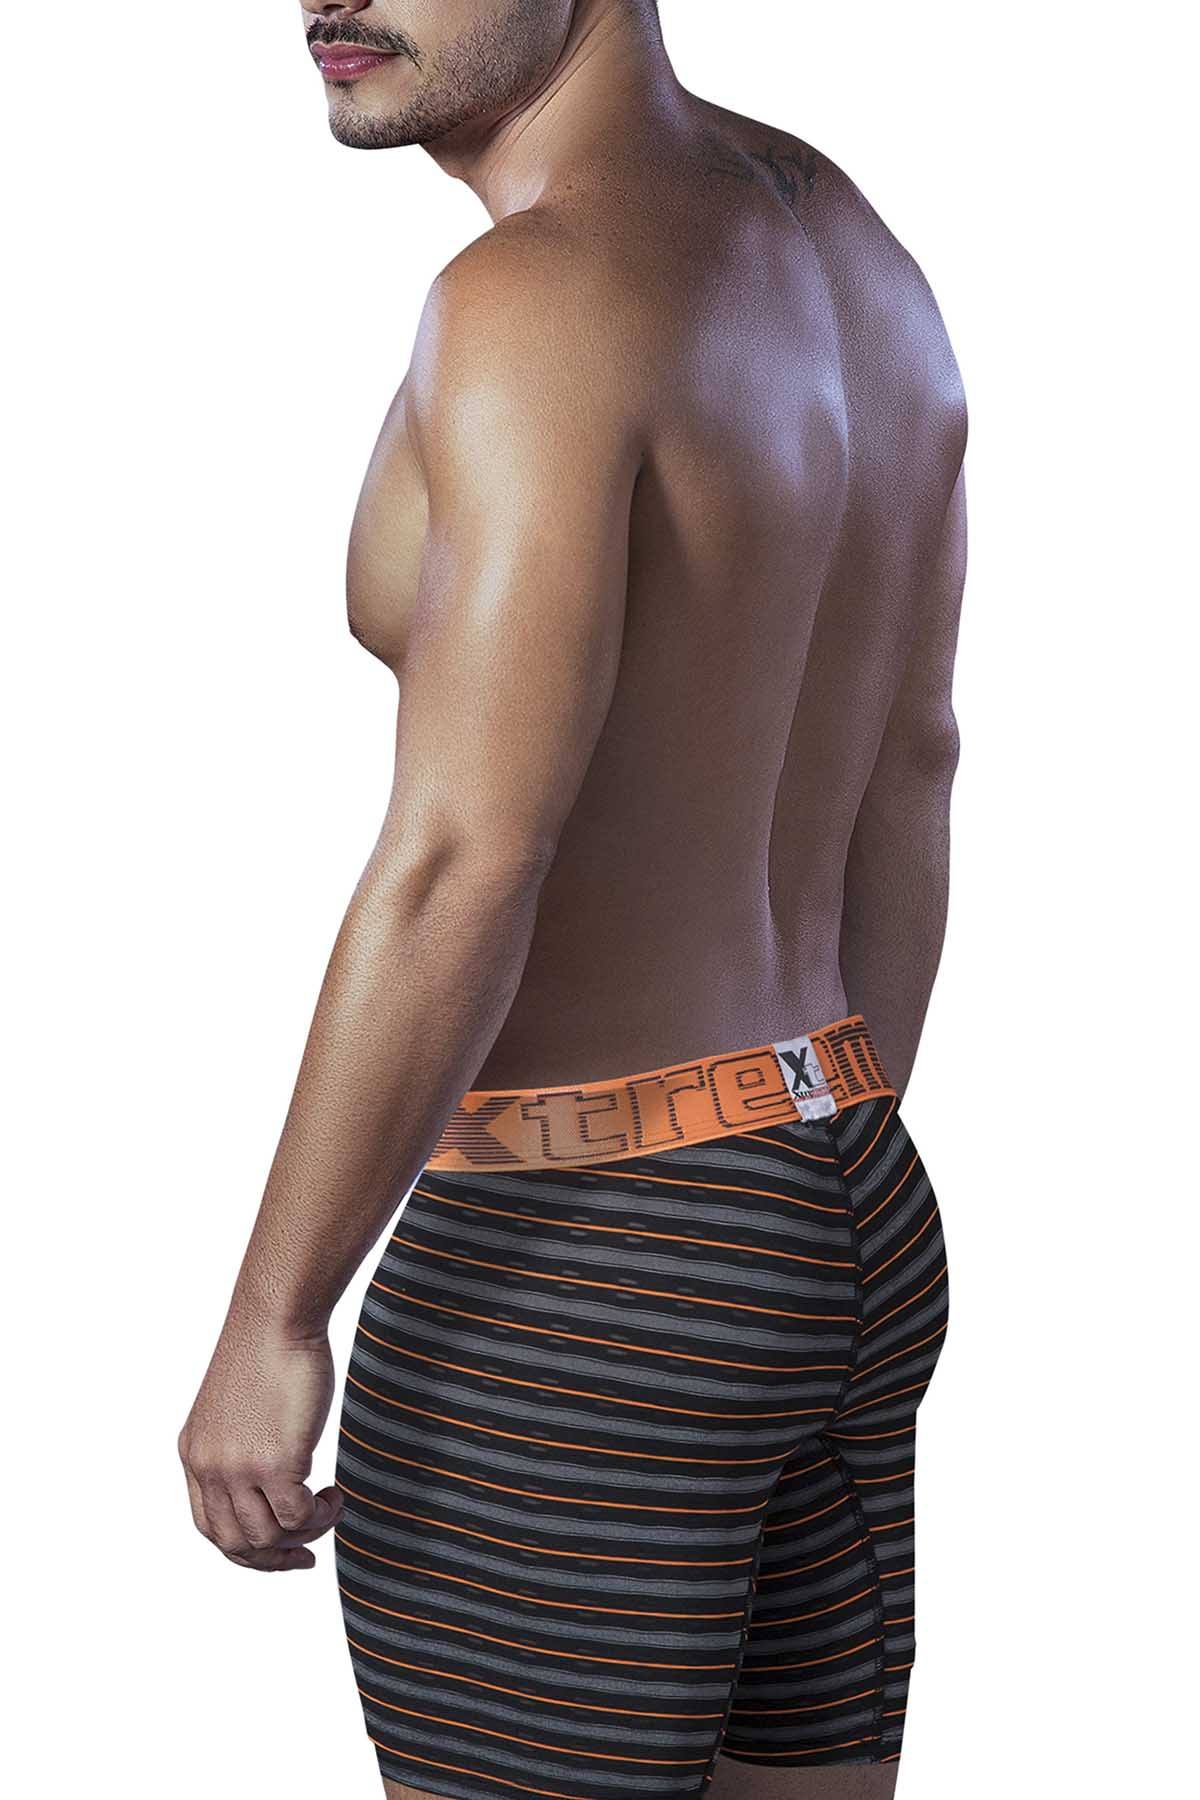 XTREMEN Black/Orange Sport Performance Breathable Boxer Brief